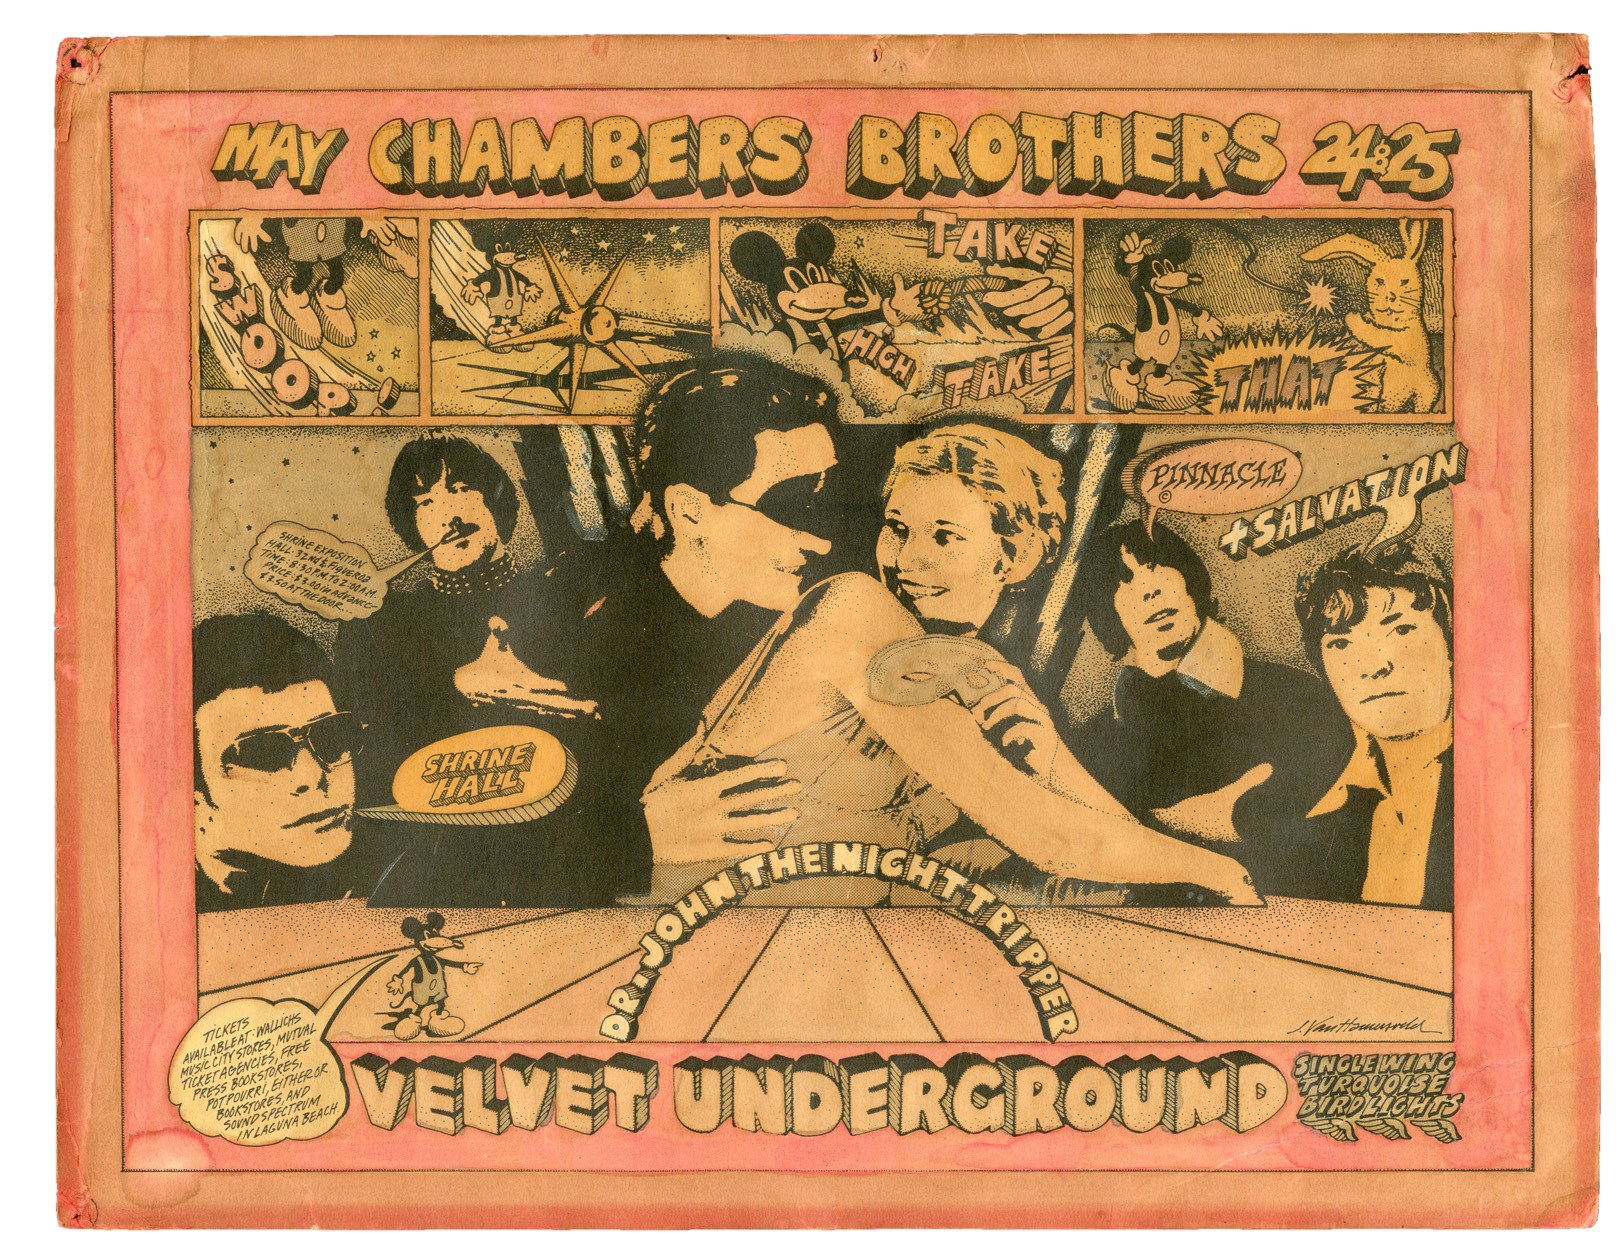 Rock 'N' Roll - 1968 Velvet Underground Poster by J. Van Hamersveld - Only Known Colored Version